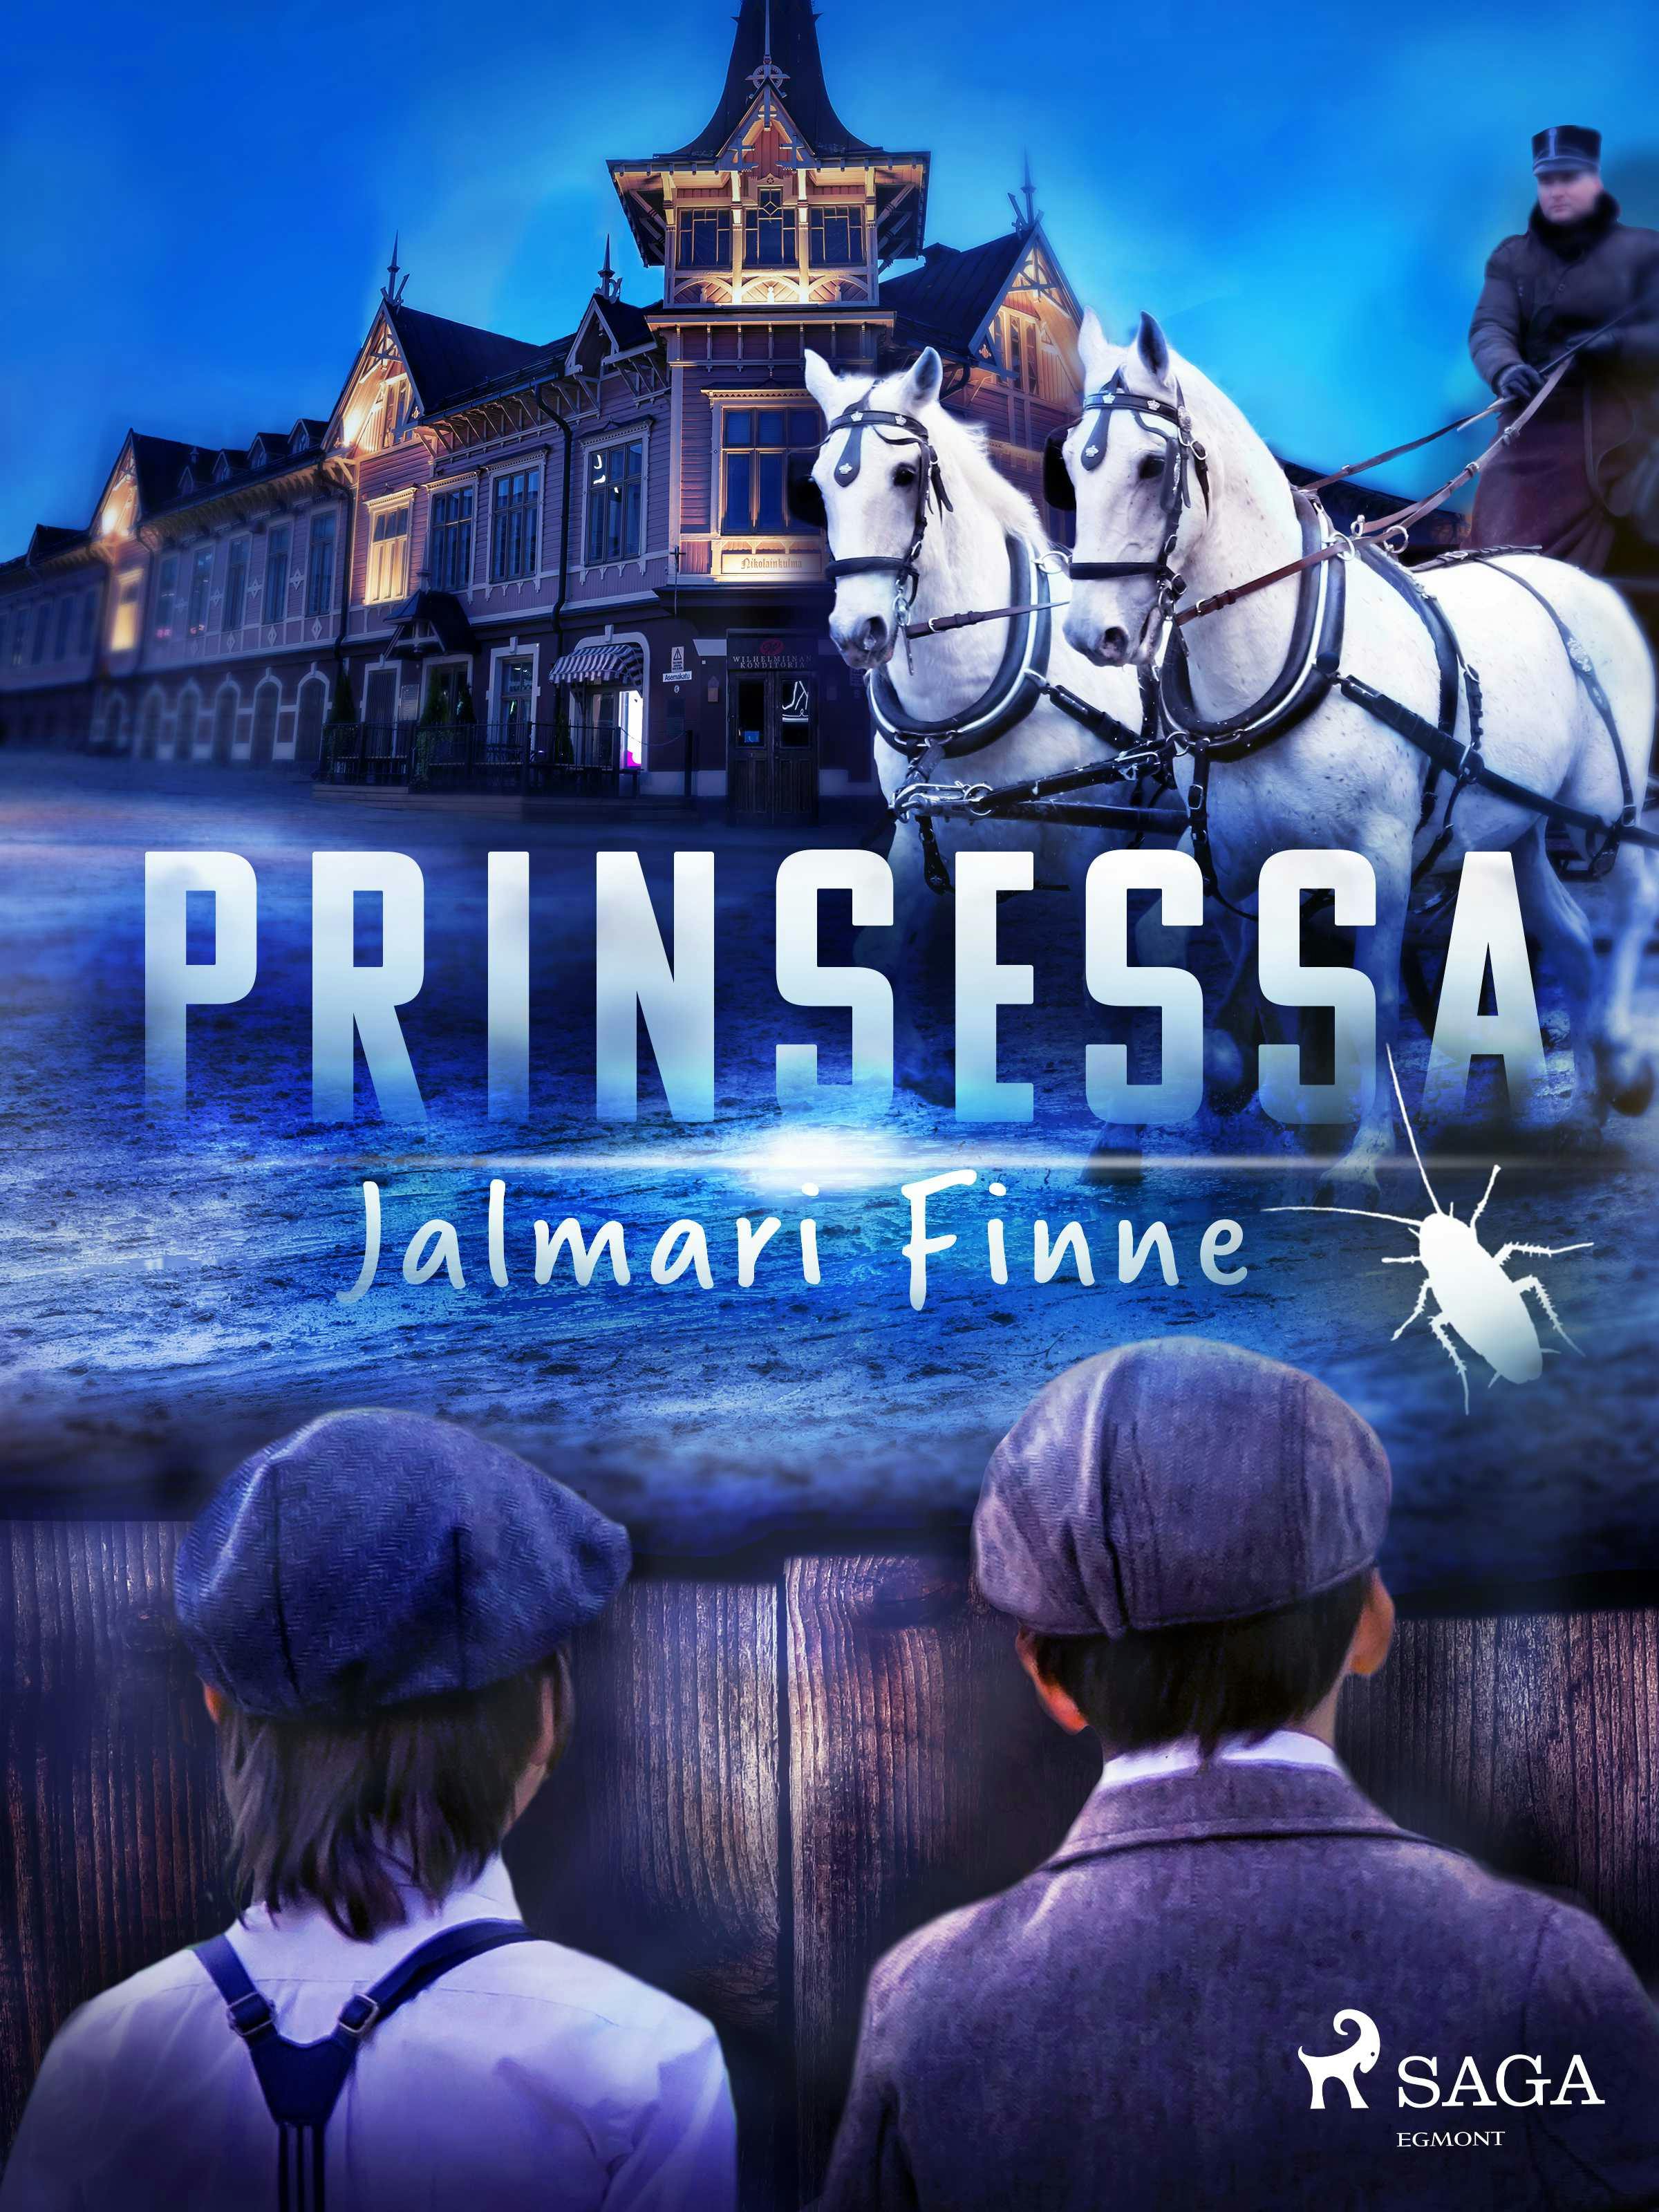 Prinsessa - Jalmari Finne